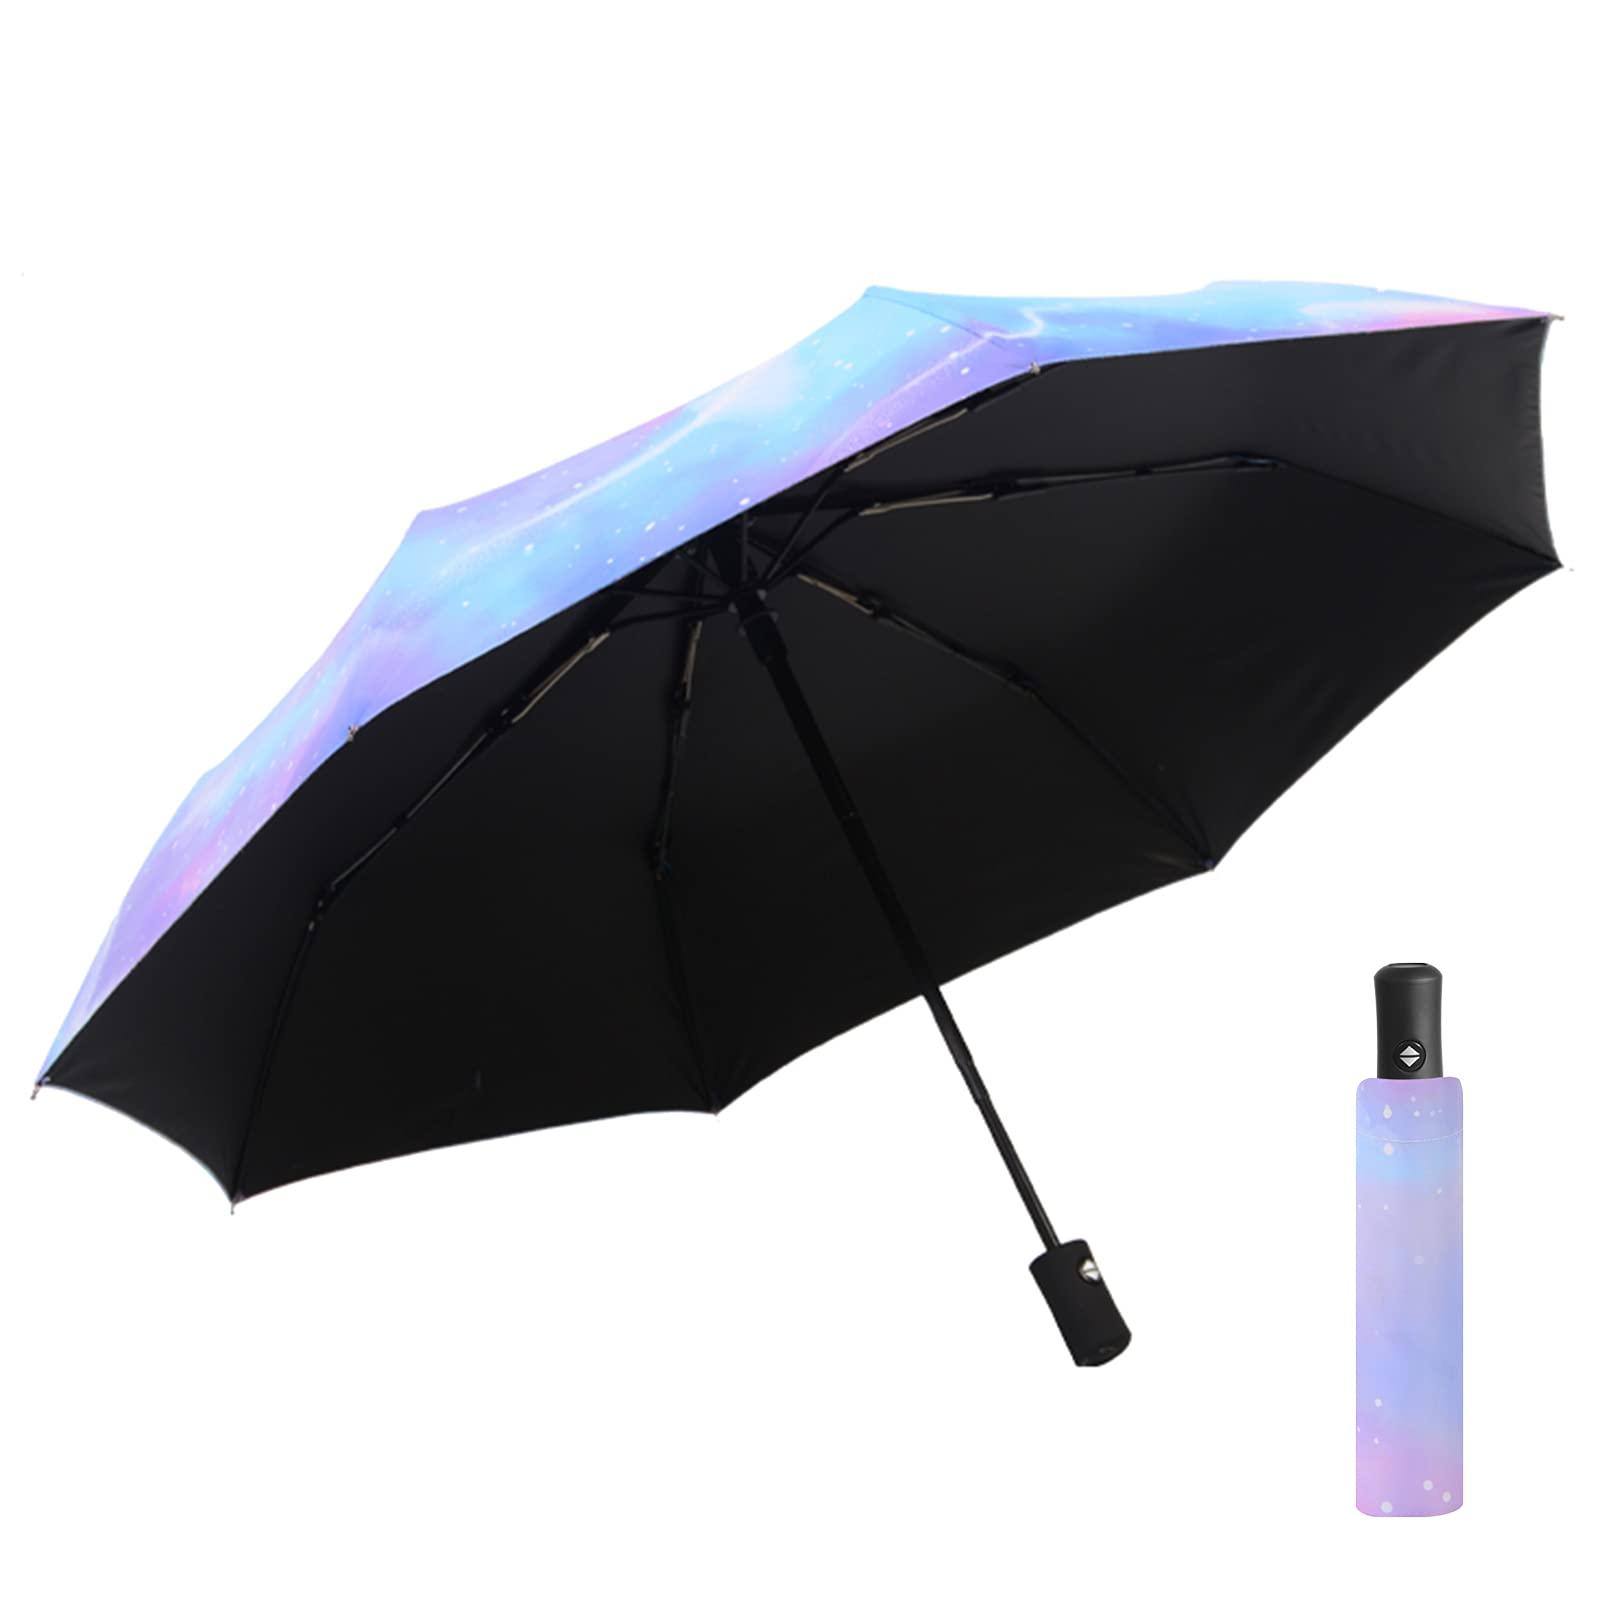 Folding Umbrella, Automatic Compact Umbrella Windproof Travel Umbrellas Durable Rain Umbrella UV Protection Sun Umbrella with Teflon Coating for Men and Women, Auto Open/Close